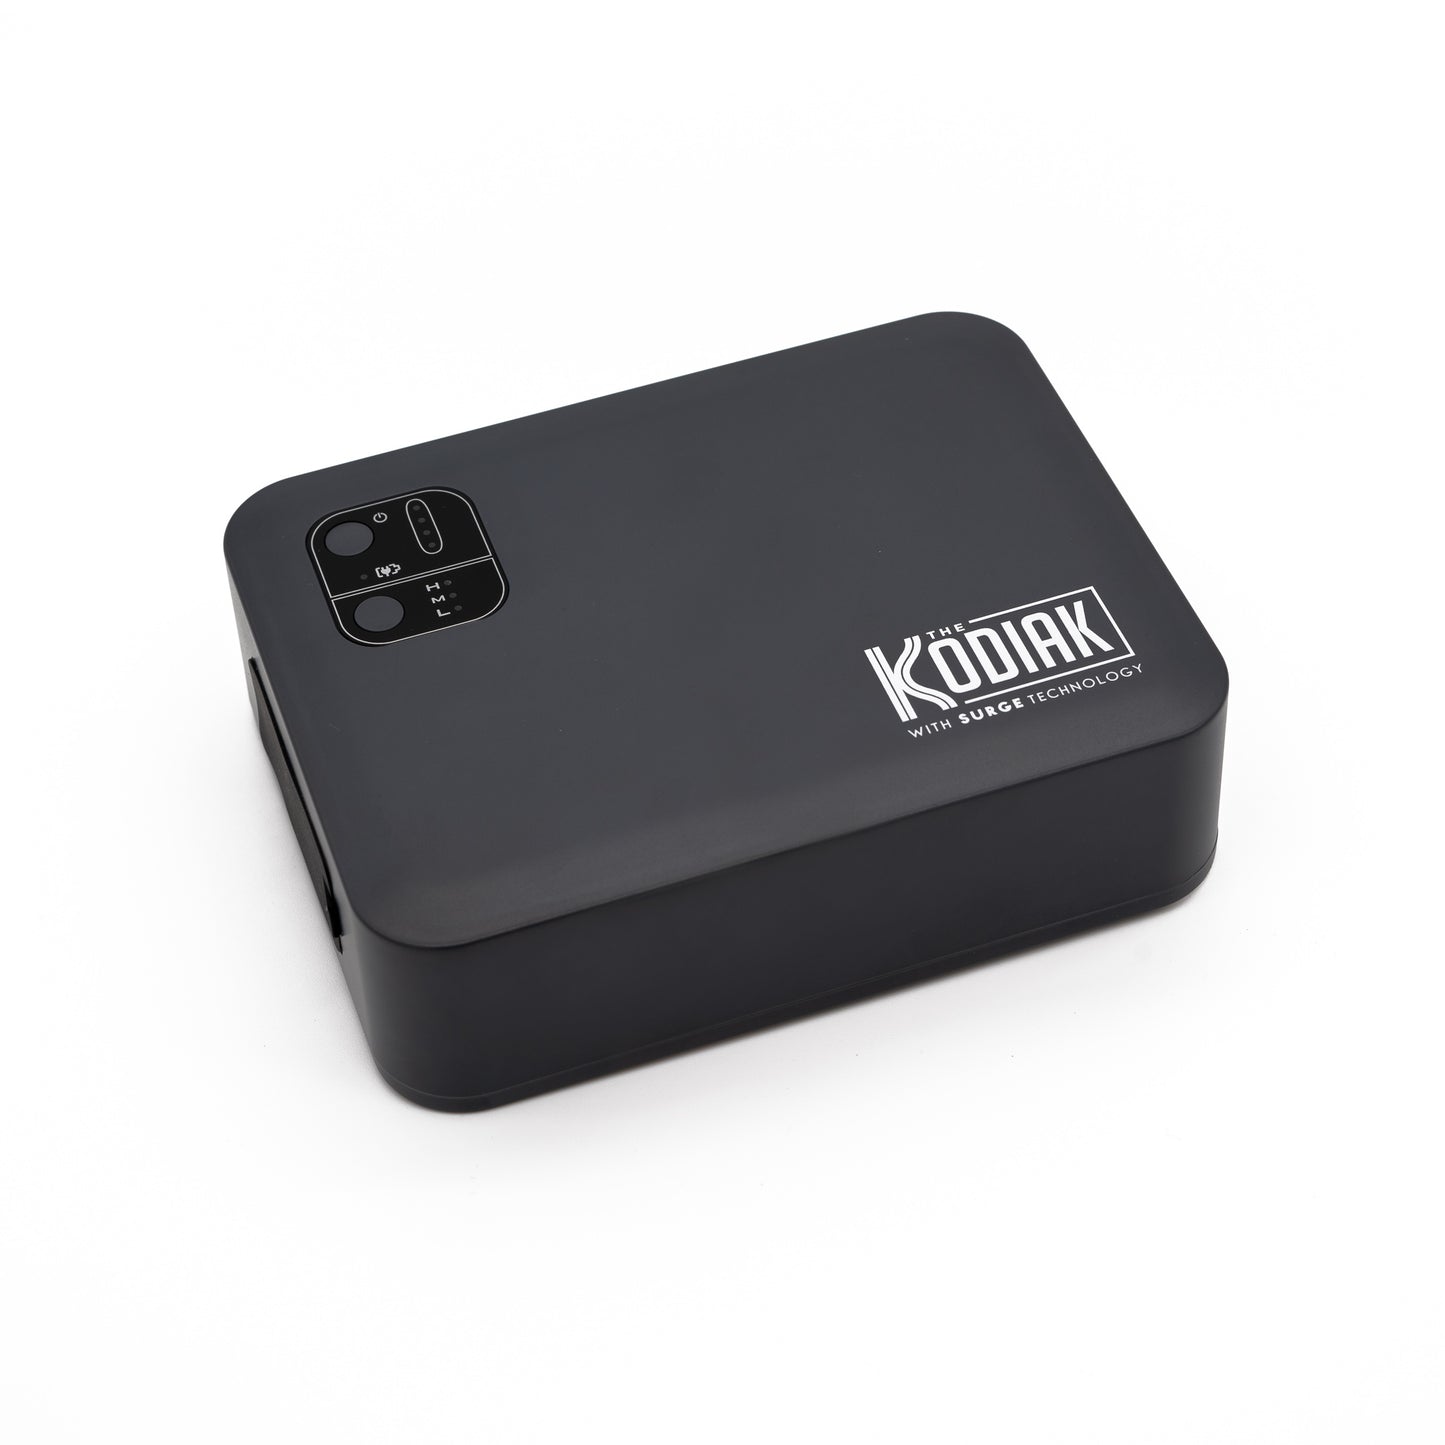 The Kodiak Battery Powered Heating Blanket™